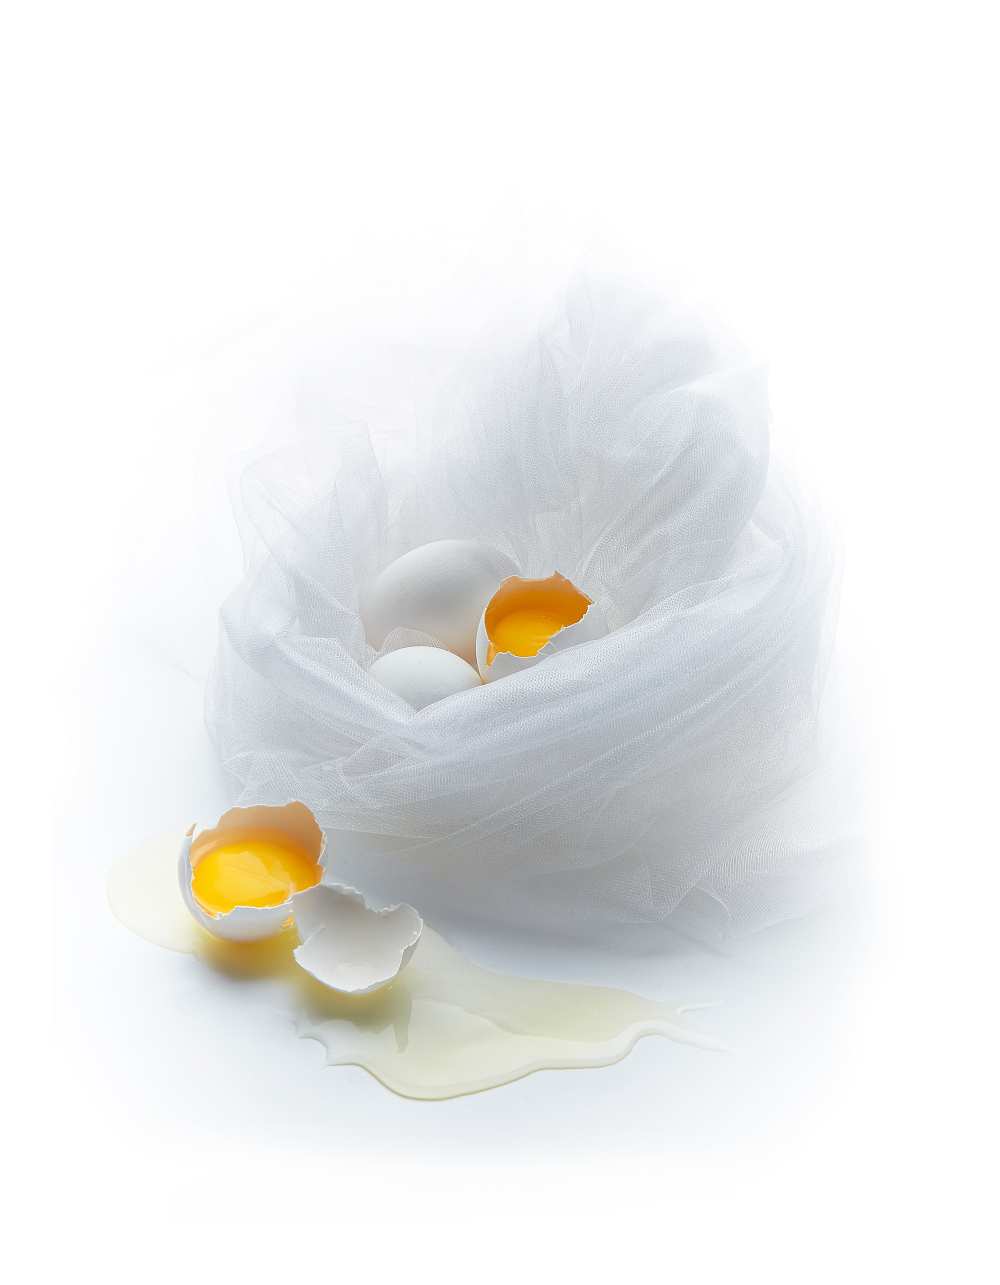 Eggs a Dmitriy Batenko